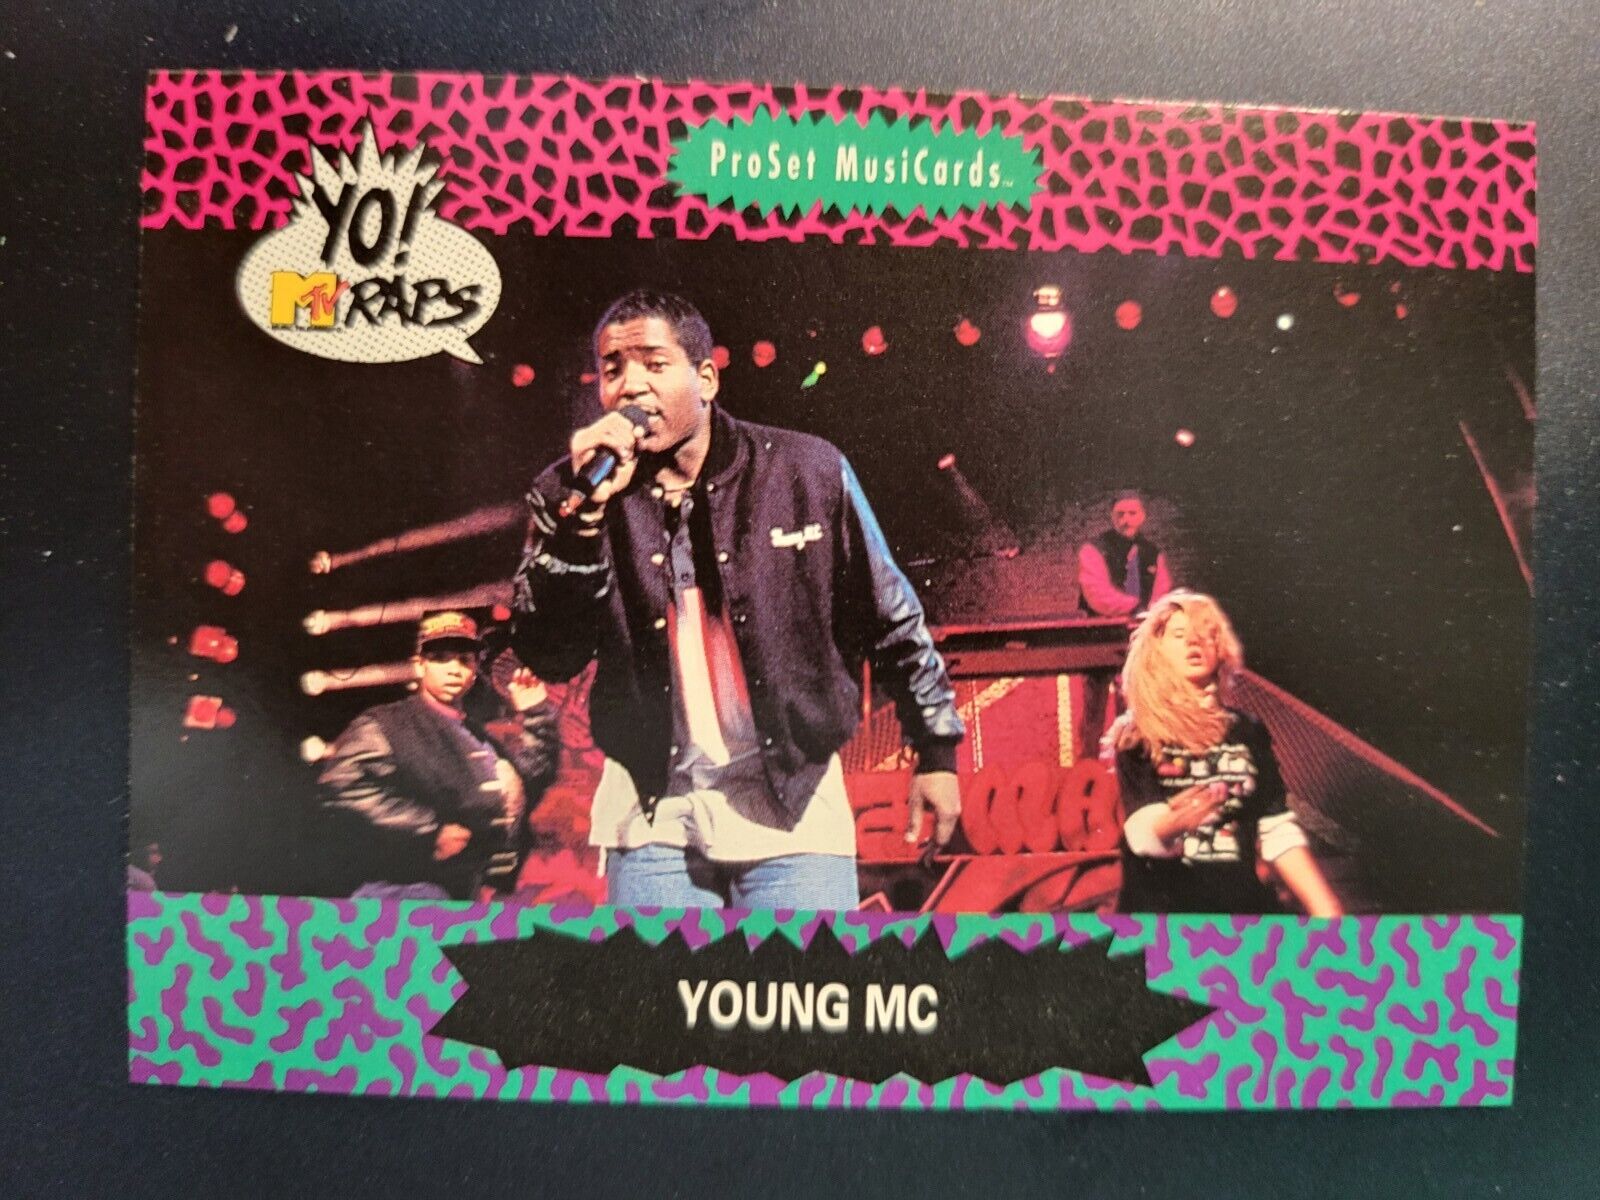 1991 ProSet MusiCards YO MTV Raps Young MC RC card #97